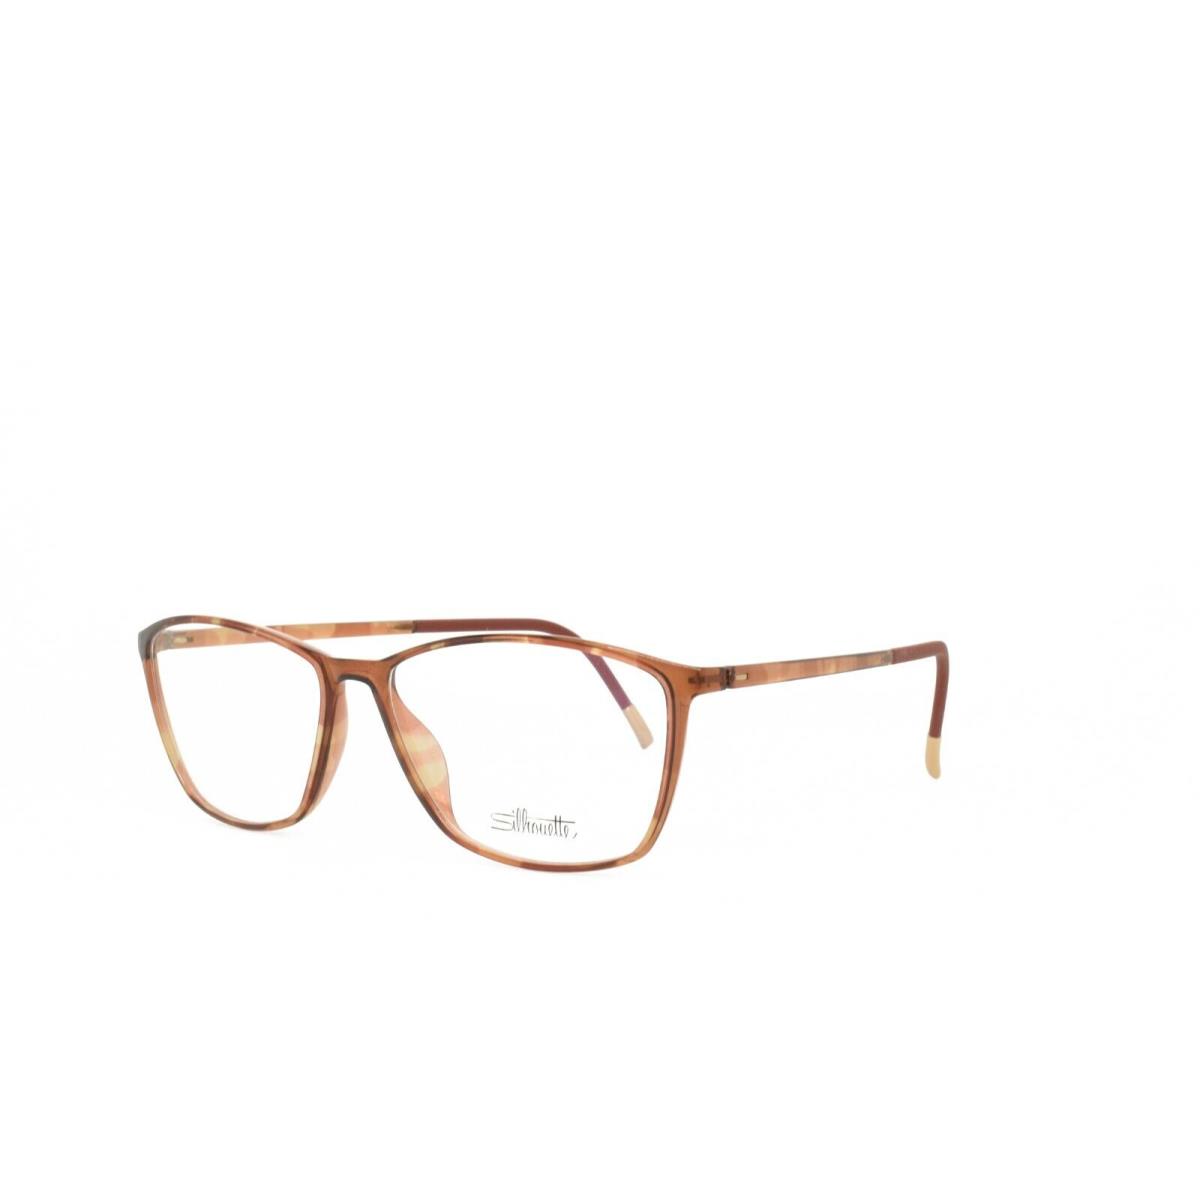 Silhouette Spx Illusion 1560 20 6111 Eyeglasses Frame 54-14-135 Brown - Frame: Brown